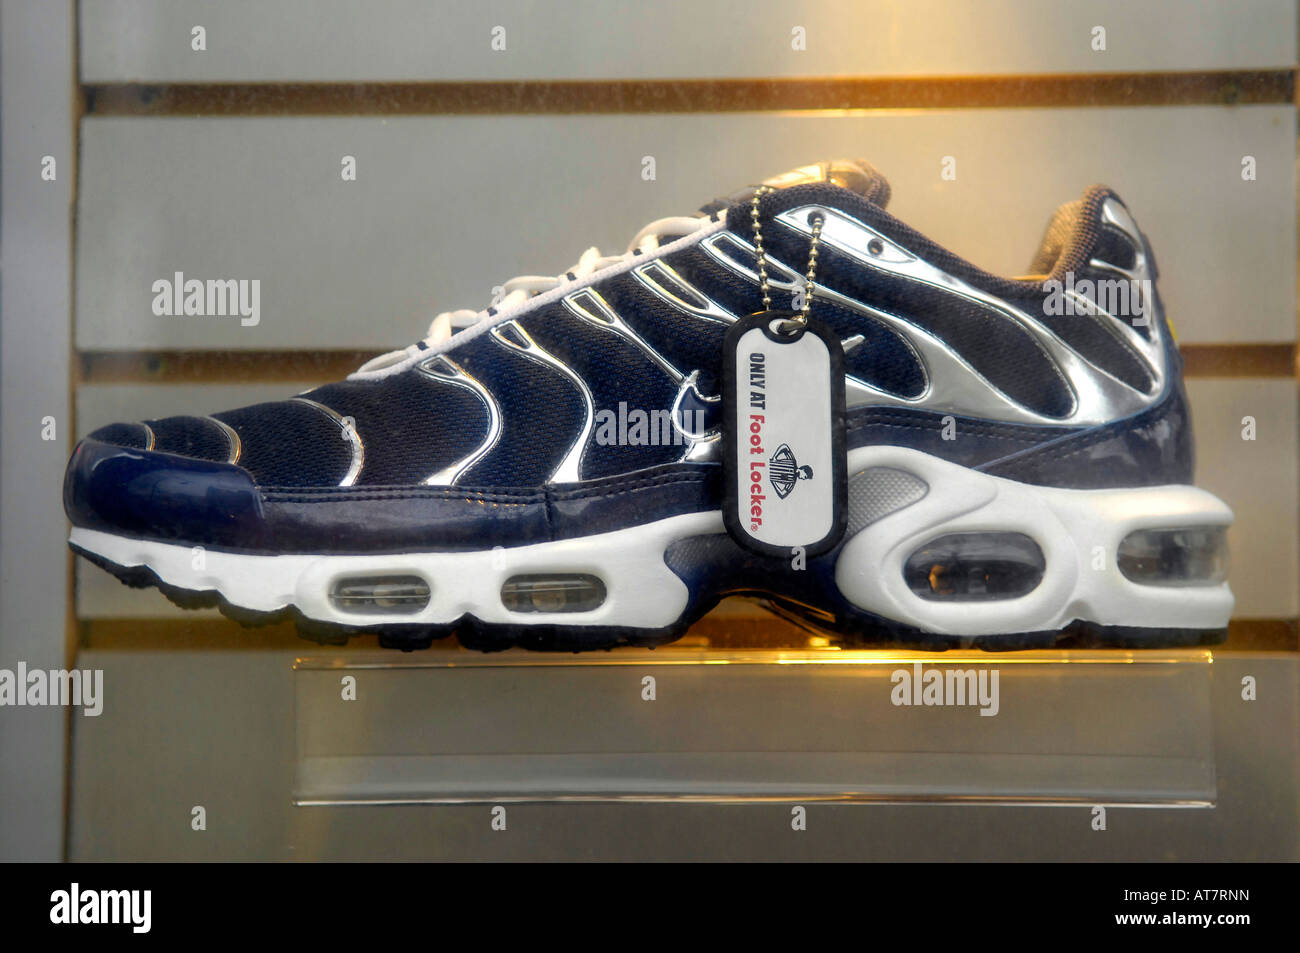 Chaussure de sport Nike Trainer chaussures moderne bleu magasin Foot Locker  tag américains Photo Stock - Alamy